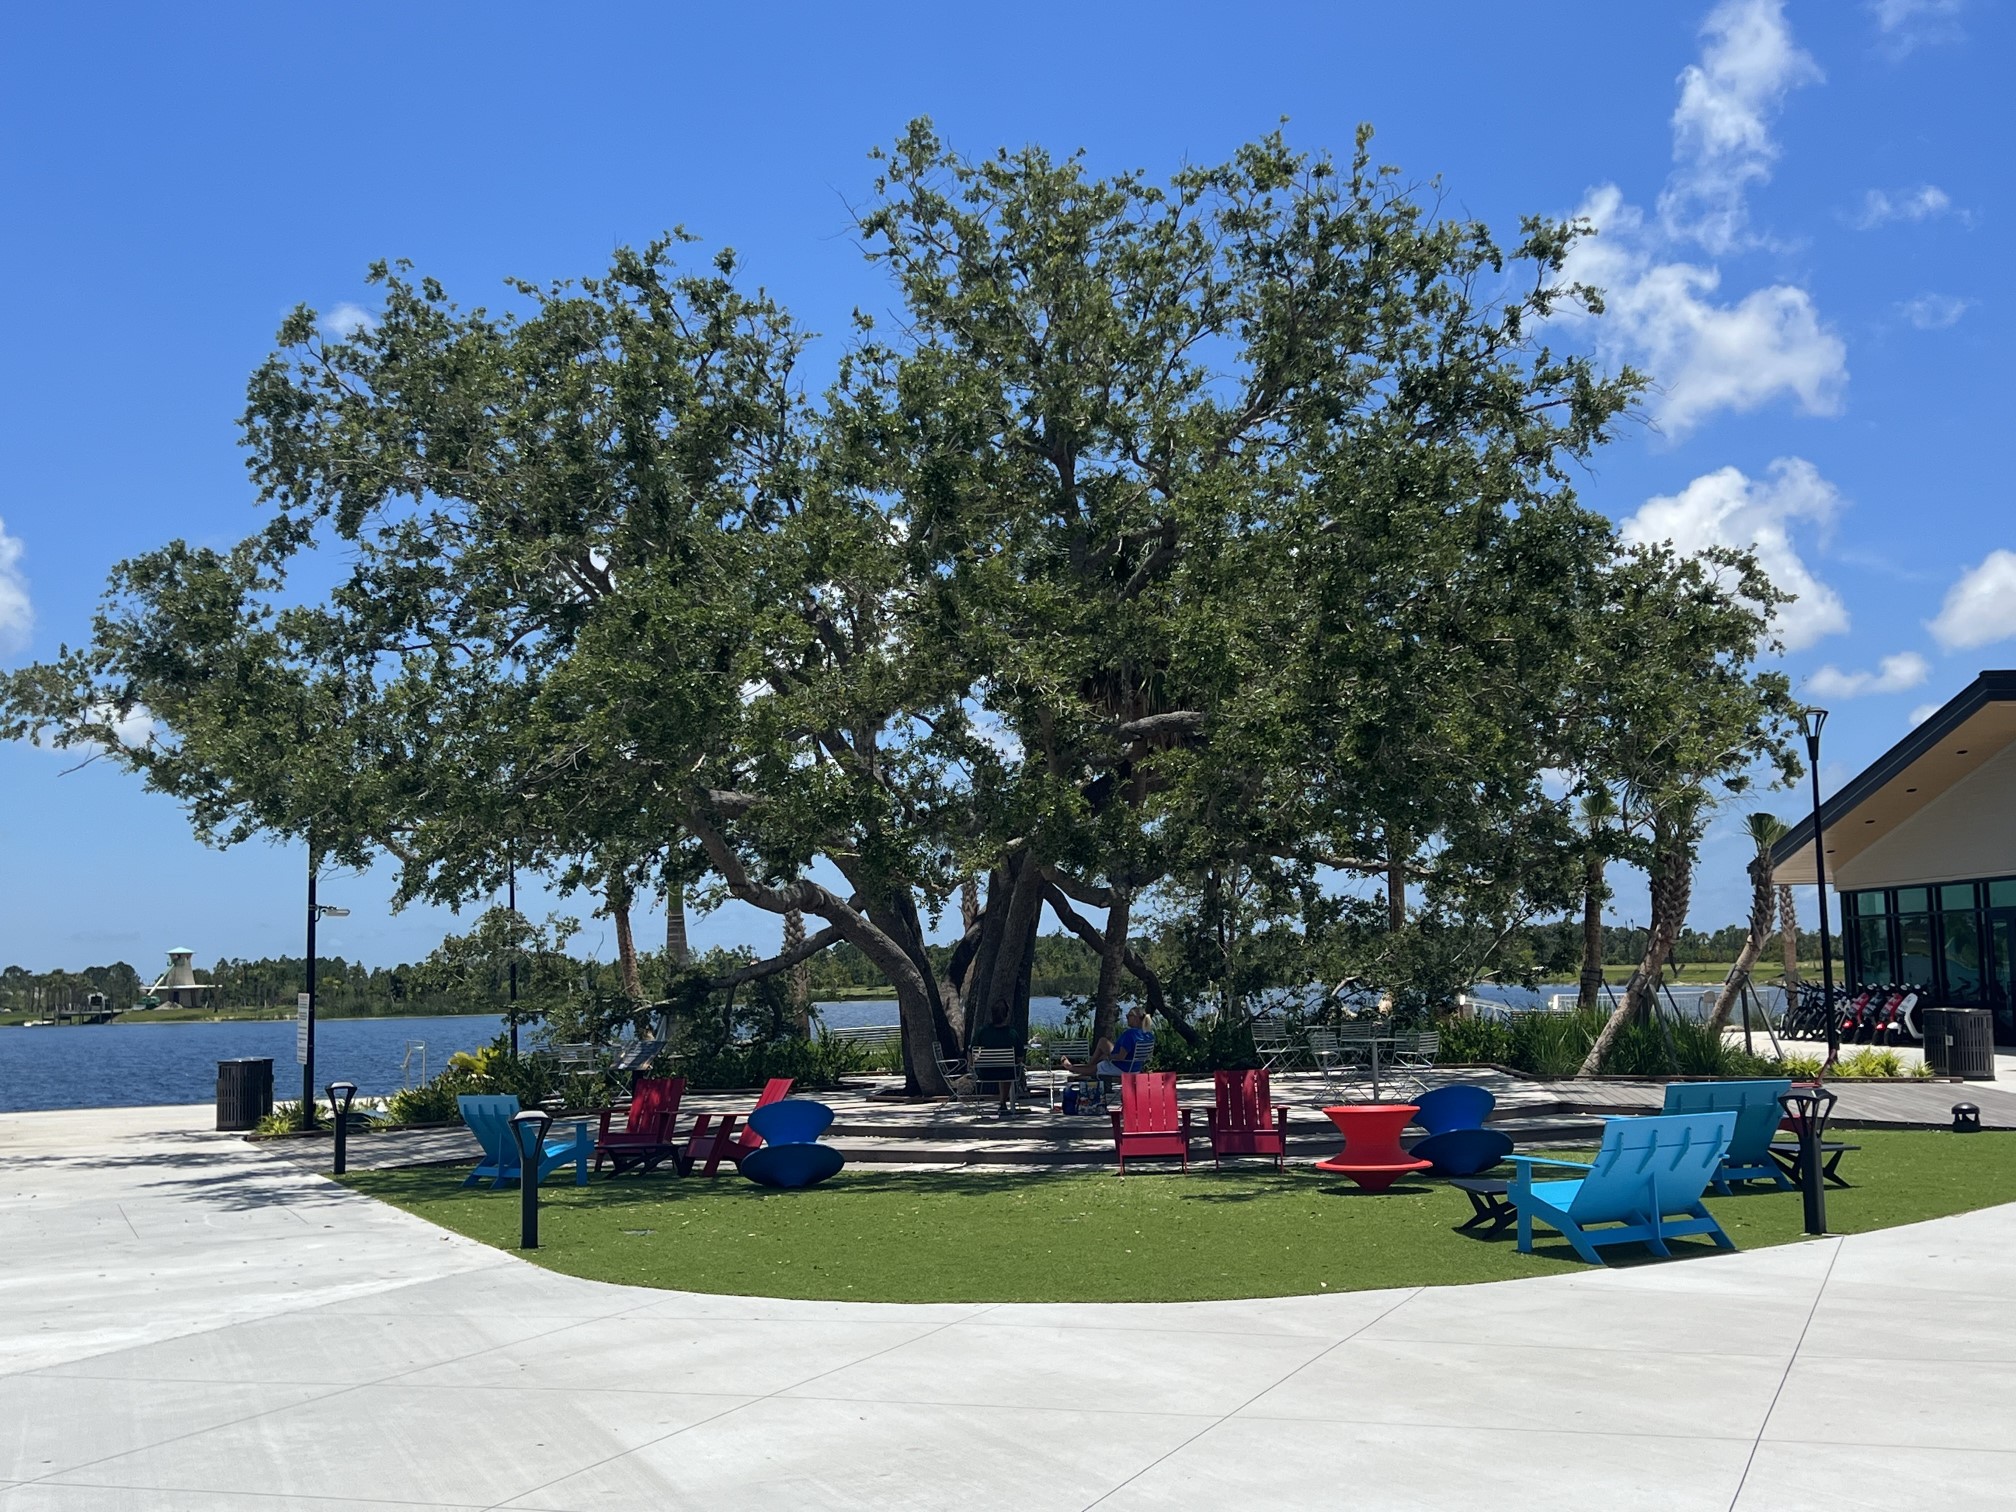 Wellen Park  Visit Sarasota County